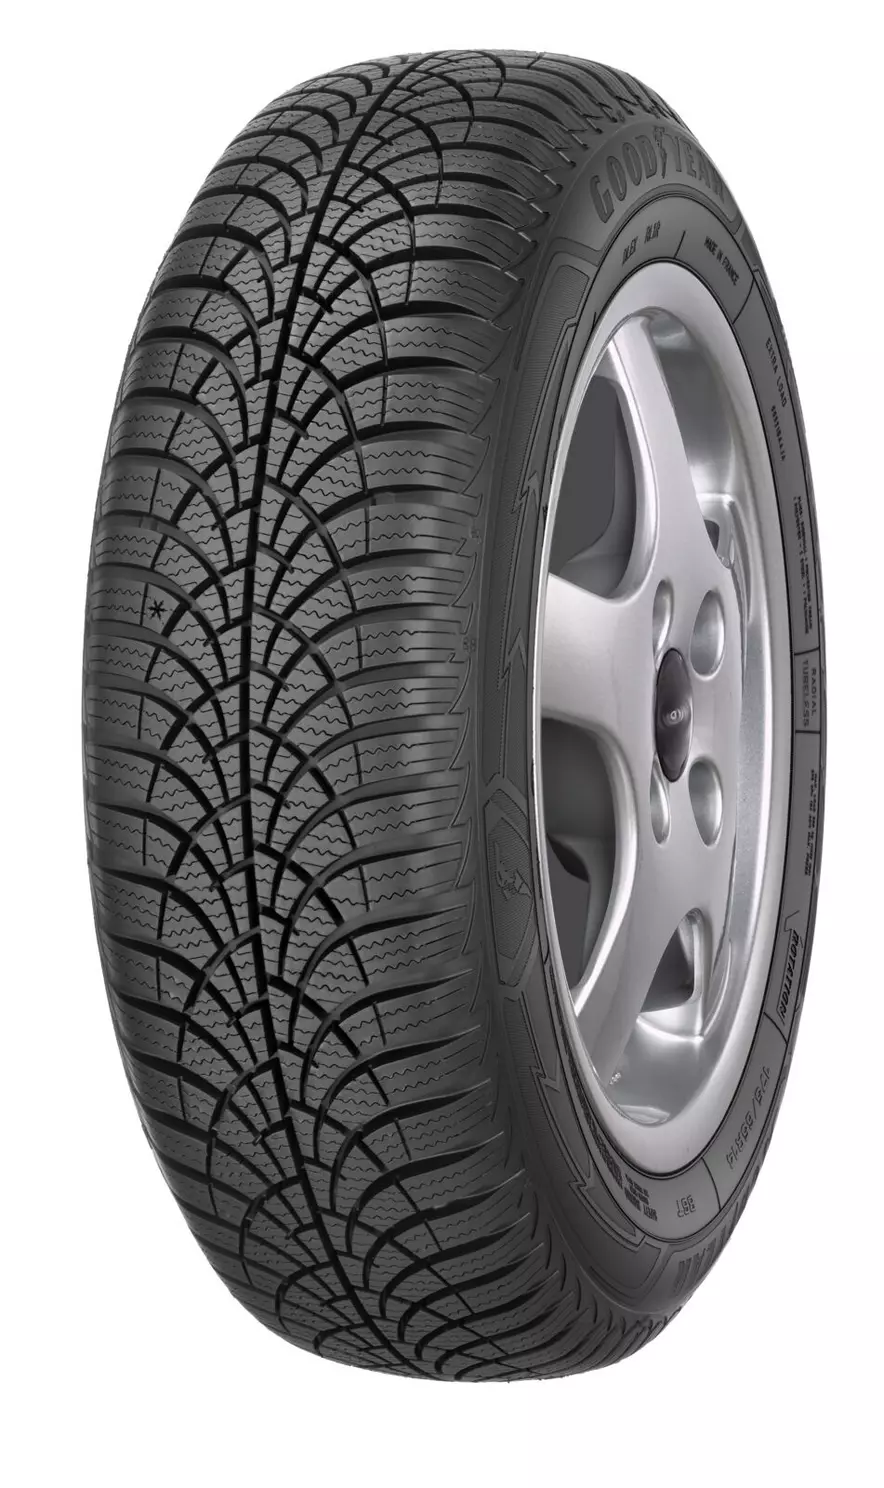 Online Goodyear Tyres Buy UltraGrip Plus 9